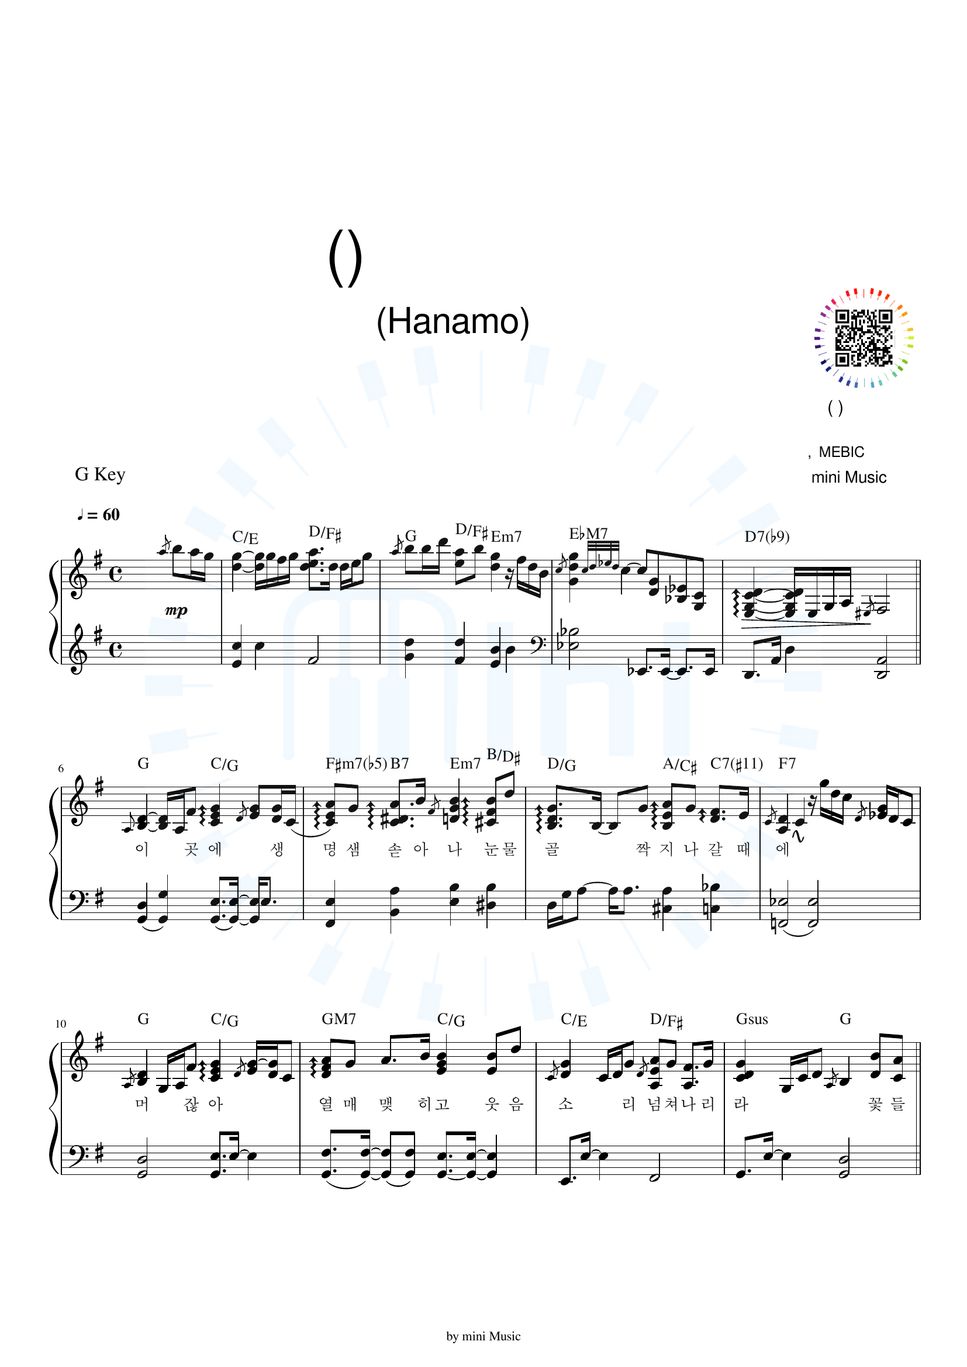 Mebic - 花も (Hanamo: 꽃들도) (G Key) Sheets By Mini Music